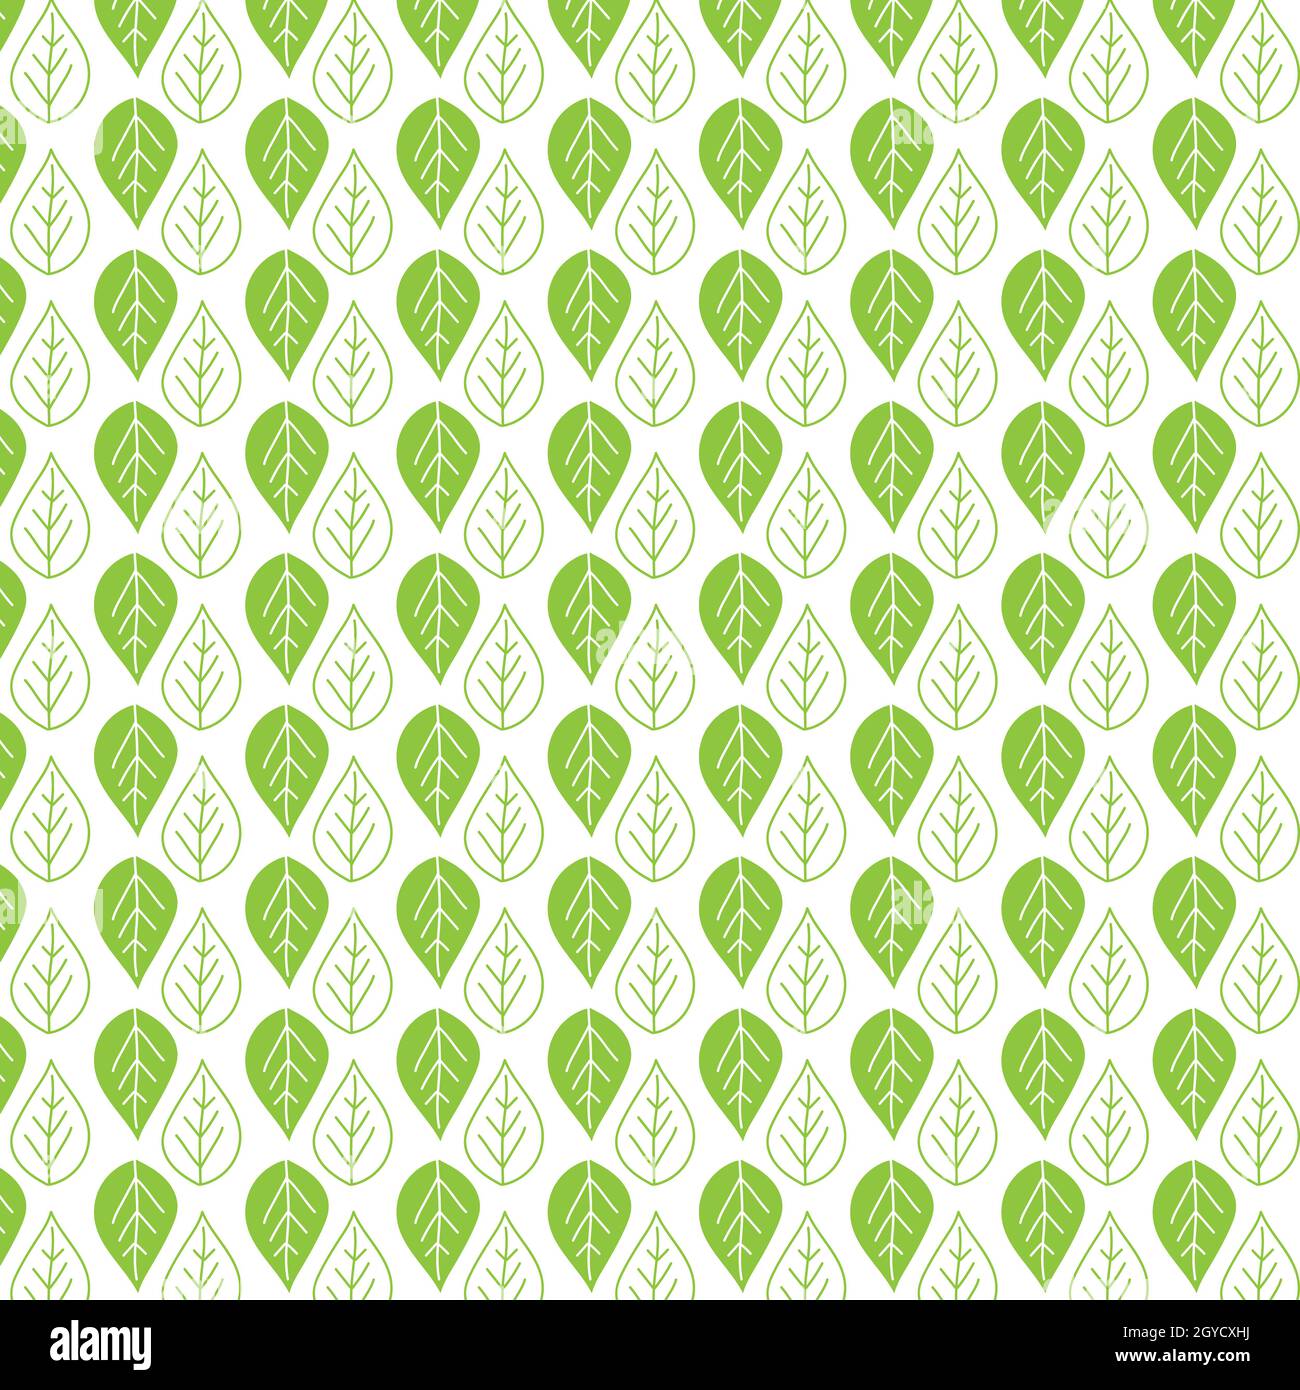 Decorative hand drawn leaf pattern background Stock Photo